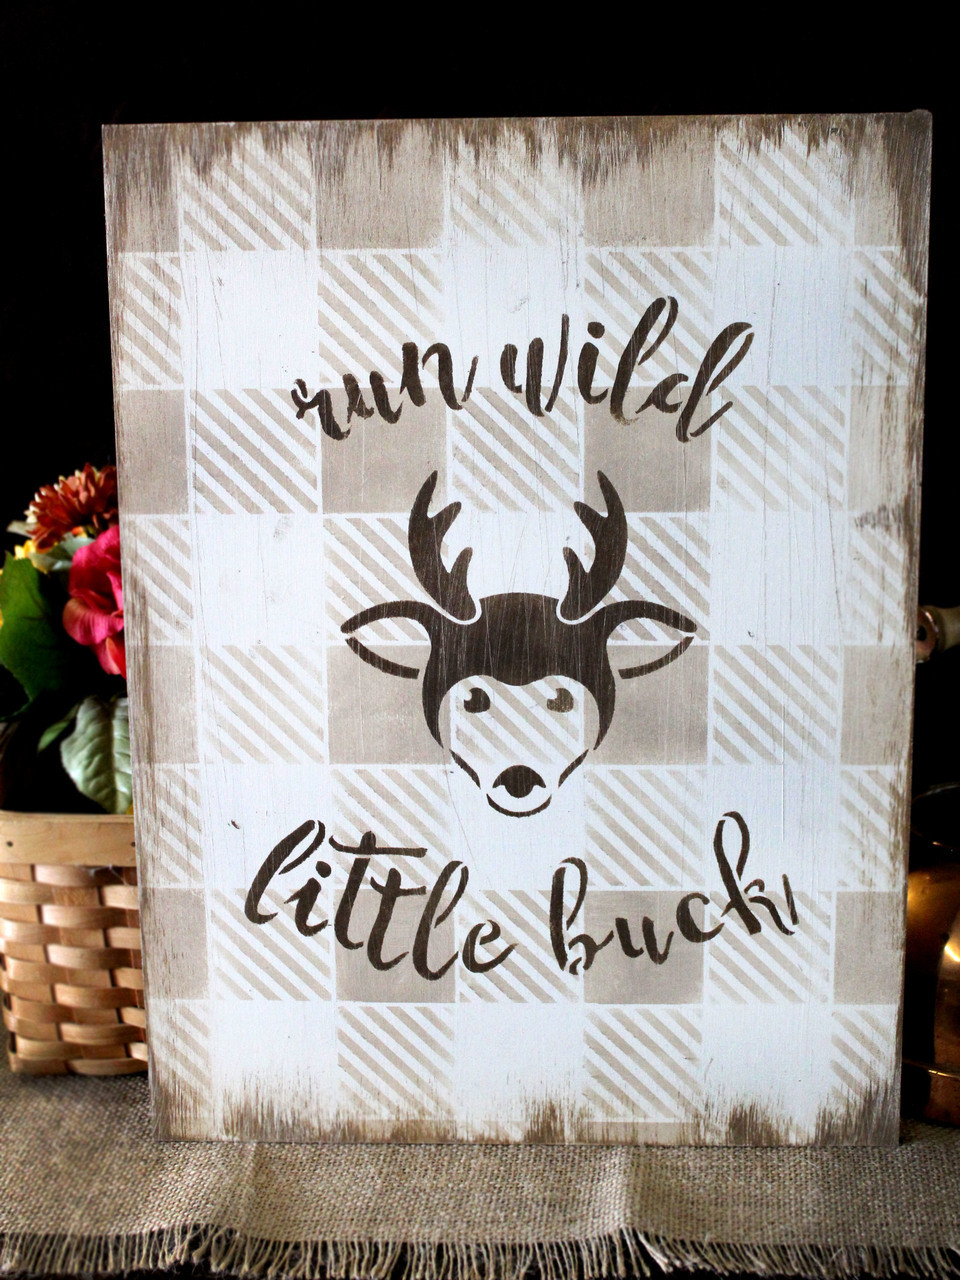 Run Wild Little Buck - Curved Hand Script - Word Art Stencil - 18" x 19" - STCL1769_5 - by StudioR12